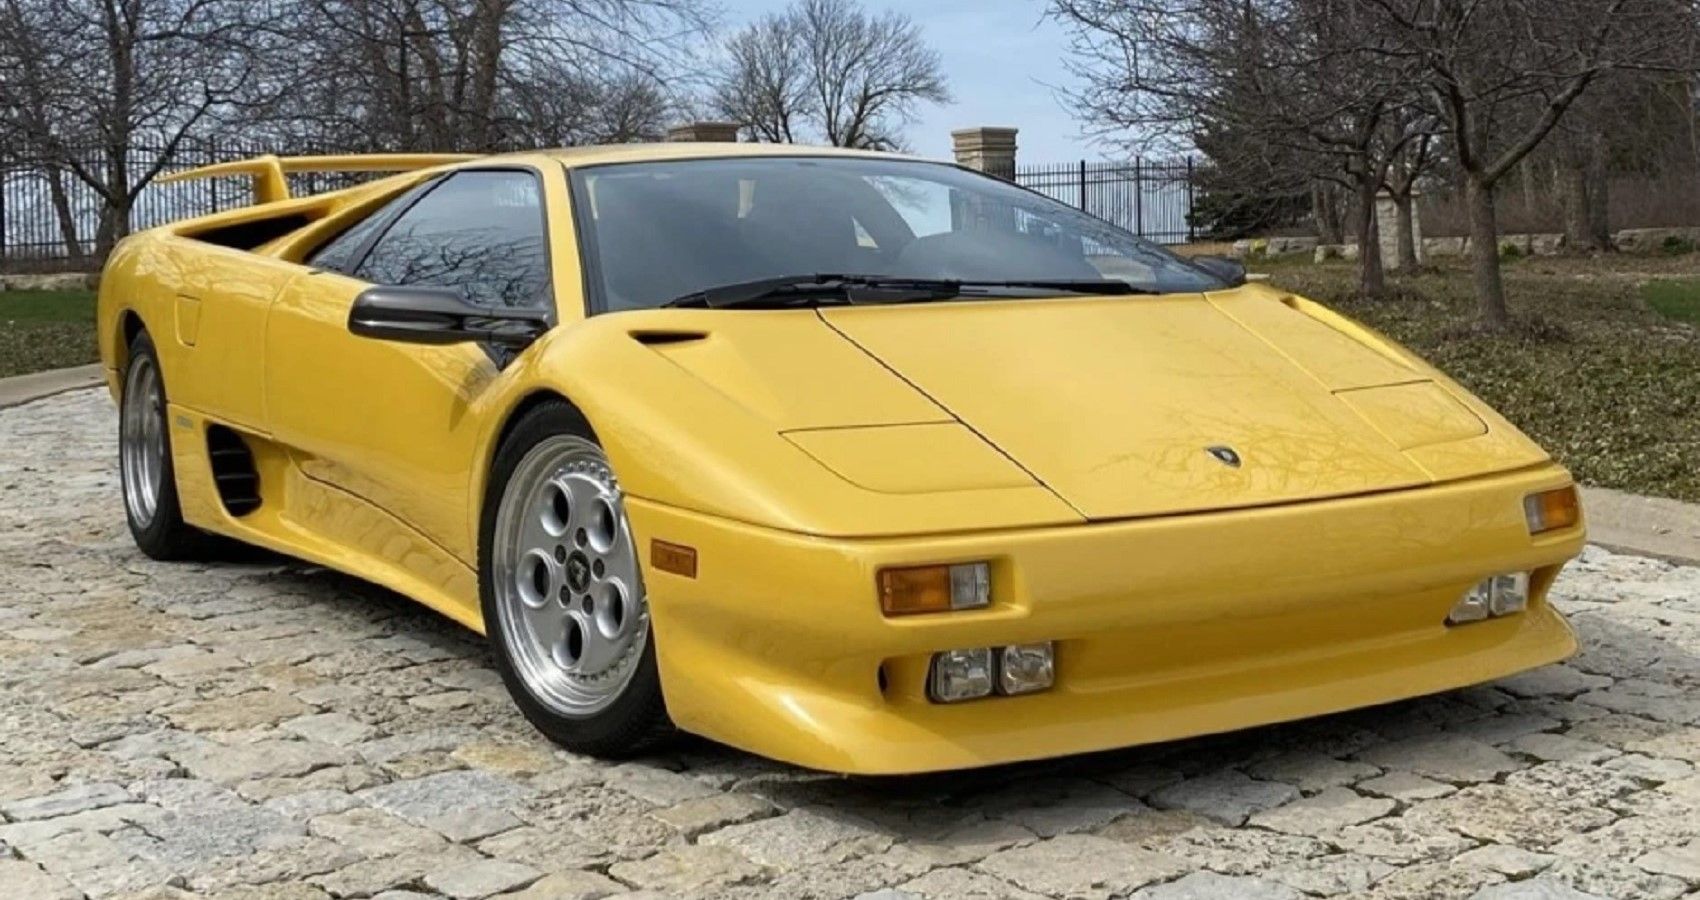 1991 Lamborghini Diablo, yellow, front